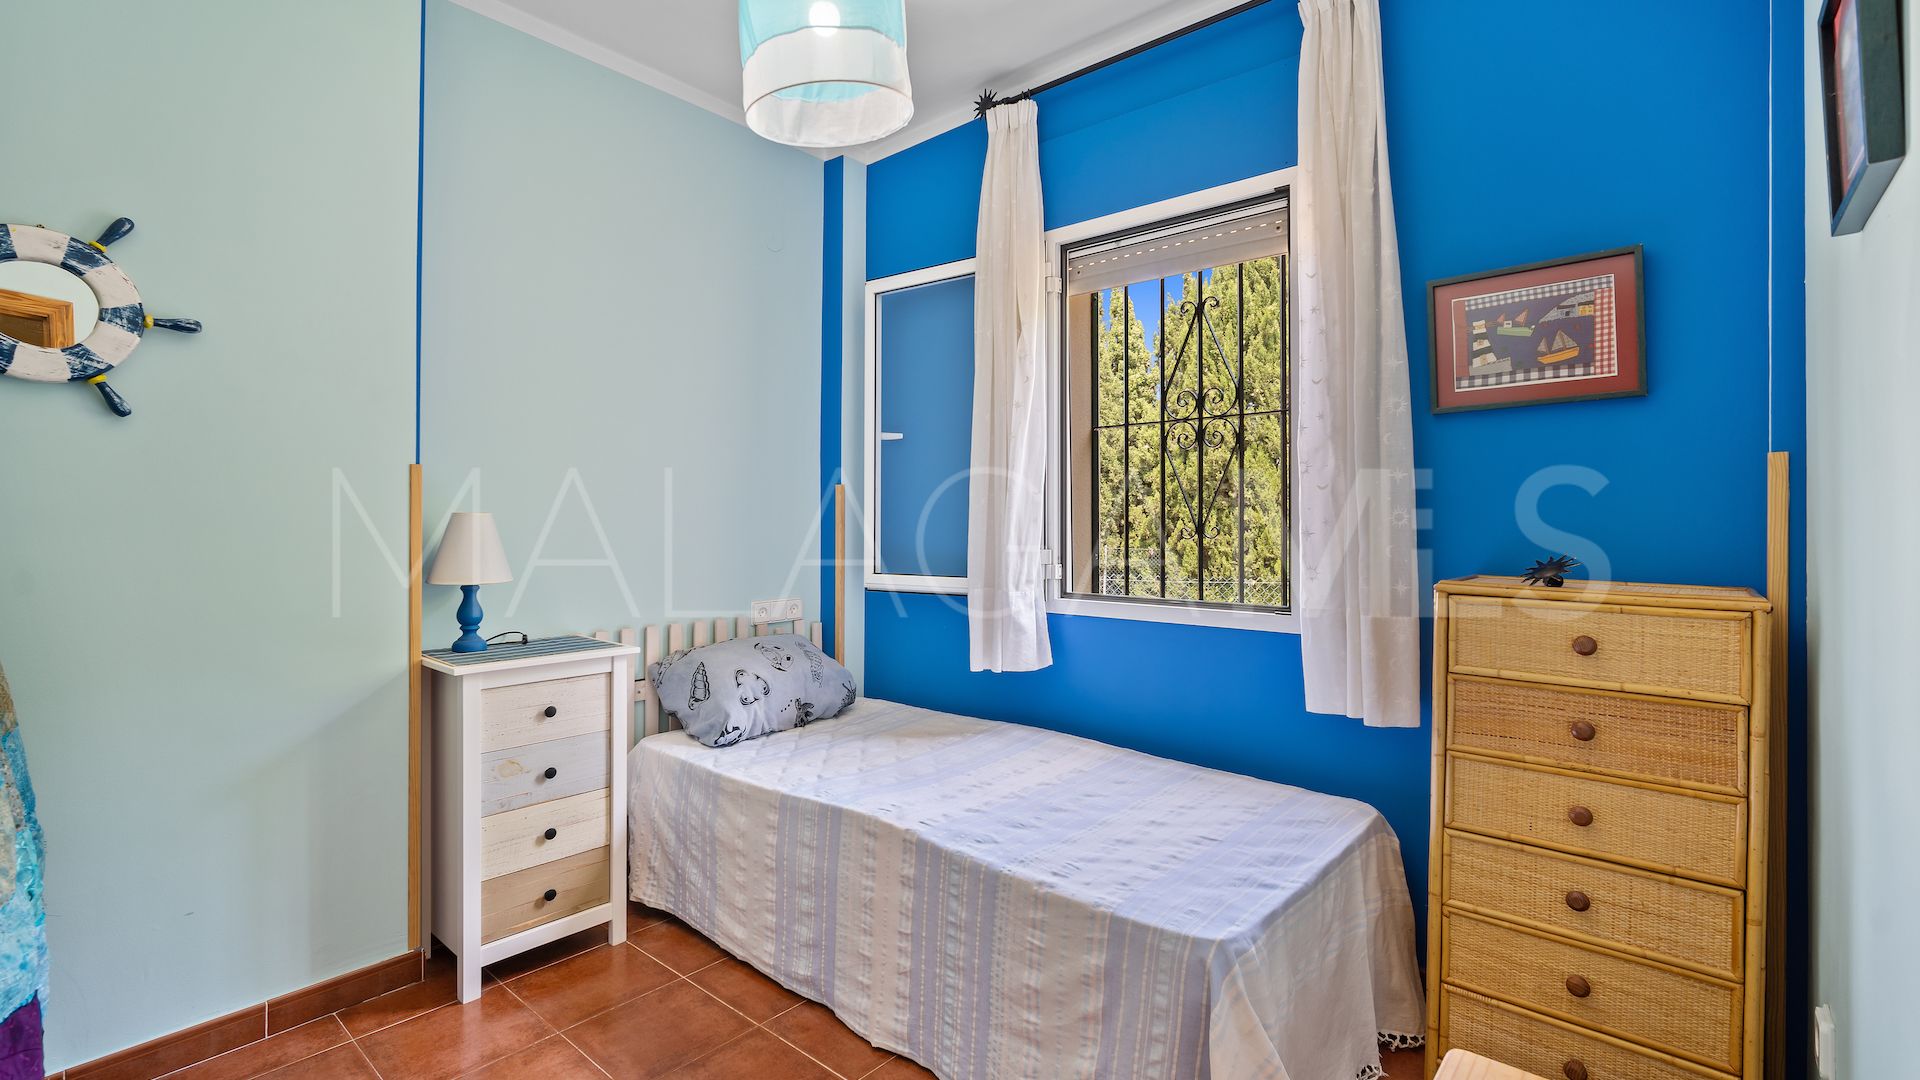 Adosado with 4 bedrooms for sale in Sierrezuela